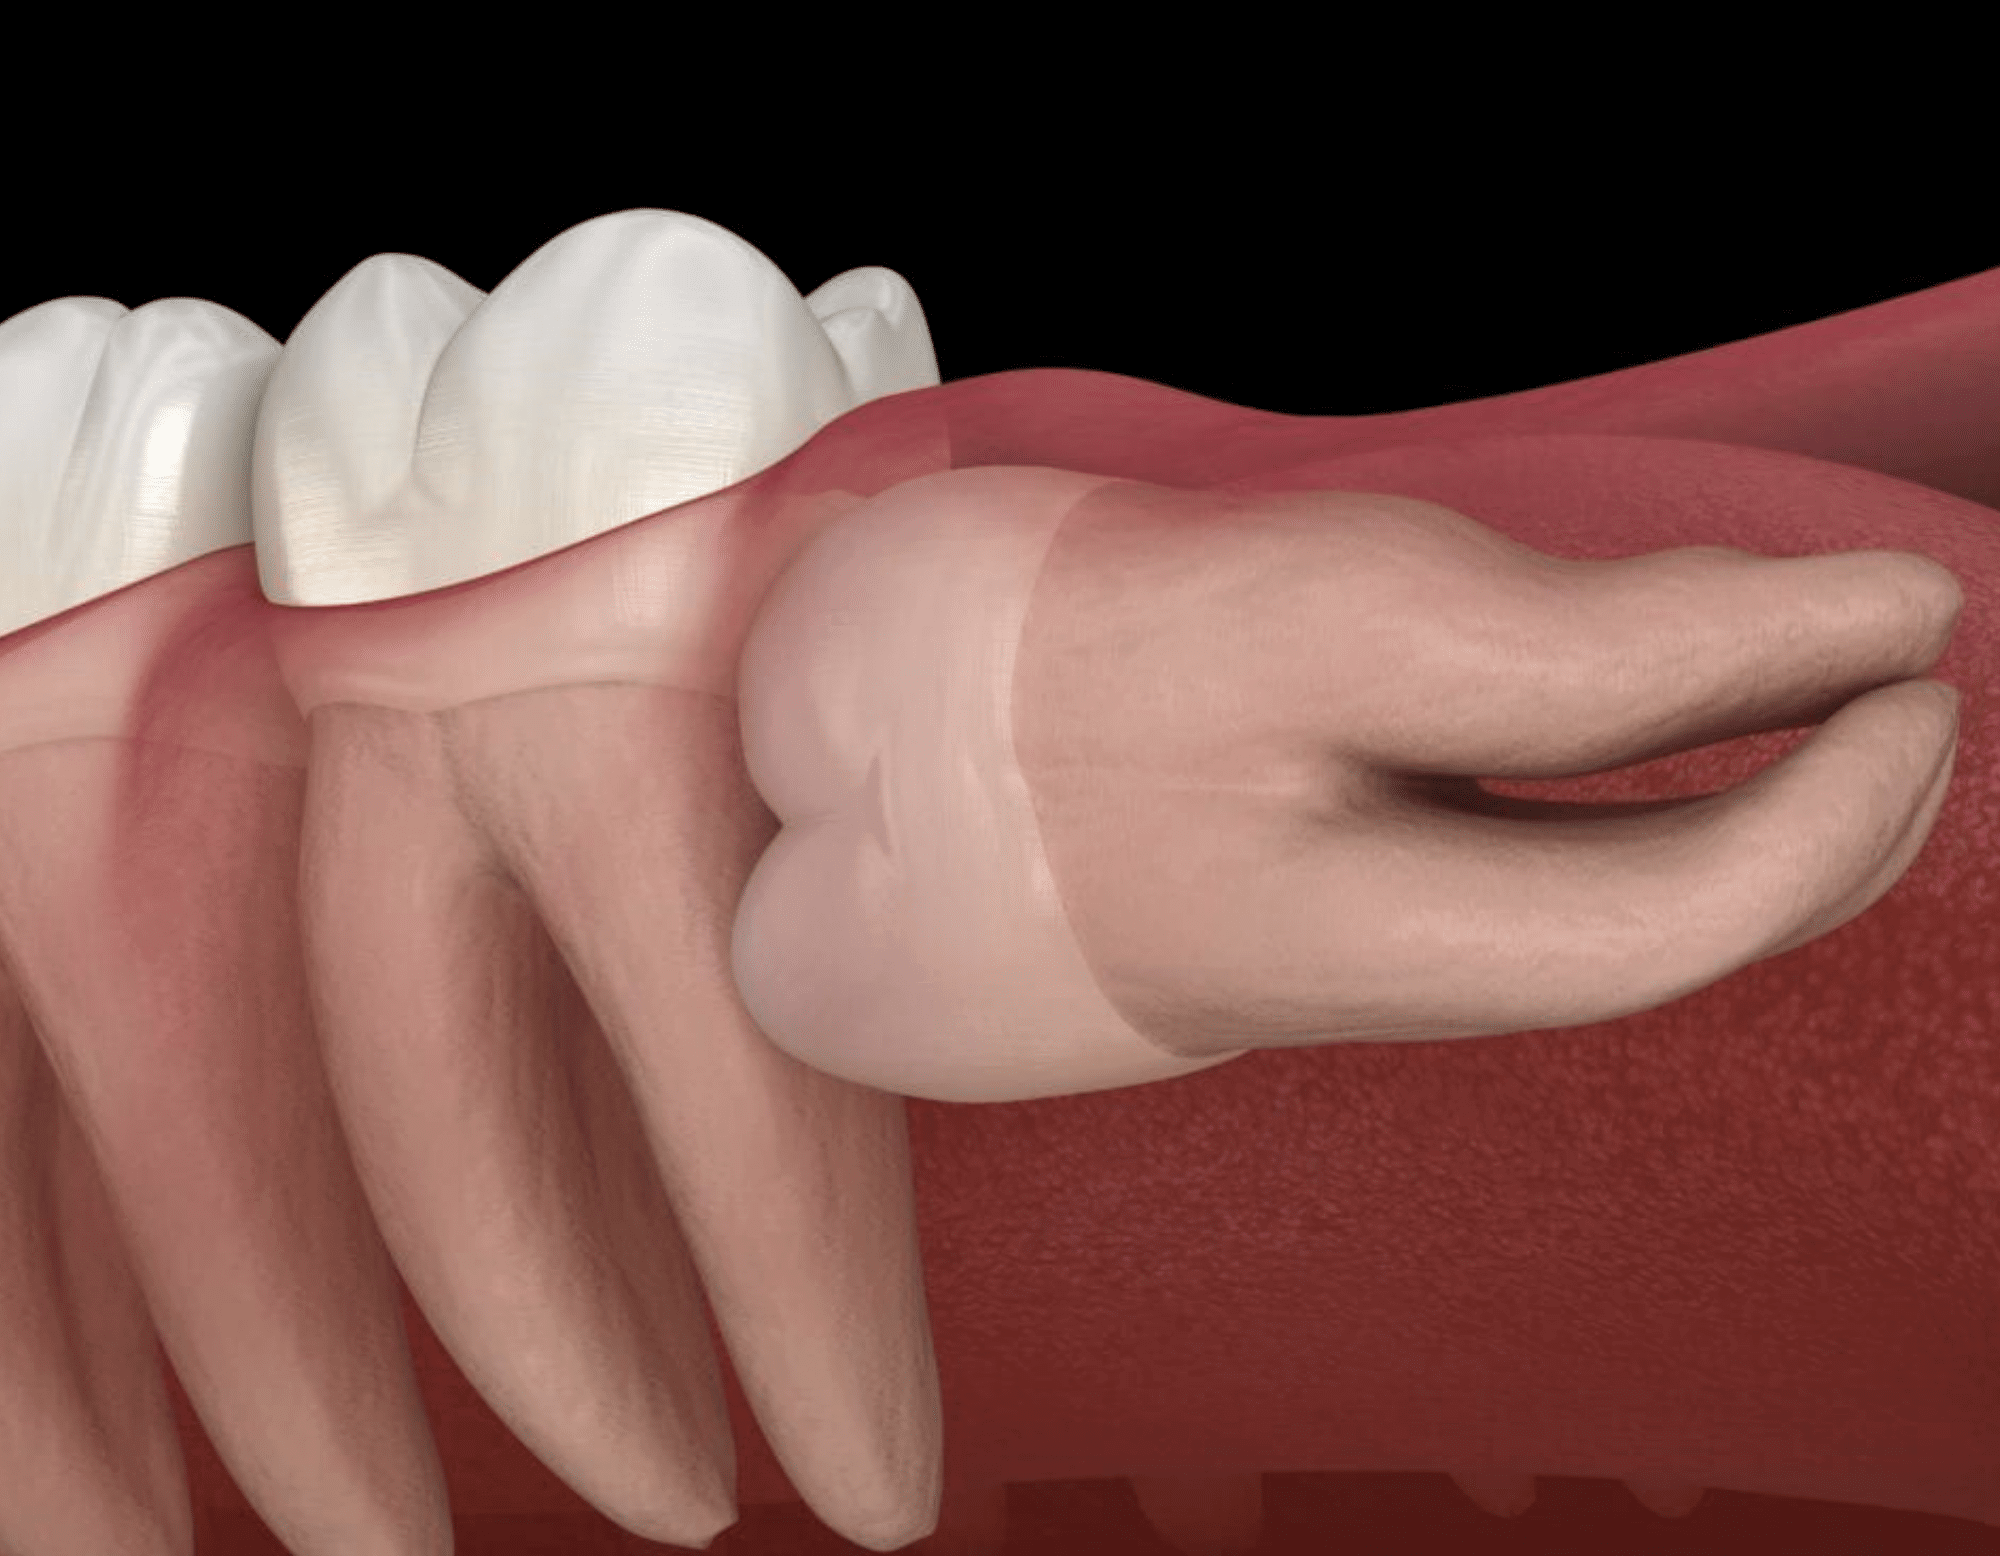 Digital reproduction of highly impacted wisdom teeth